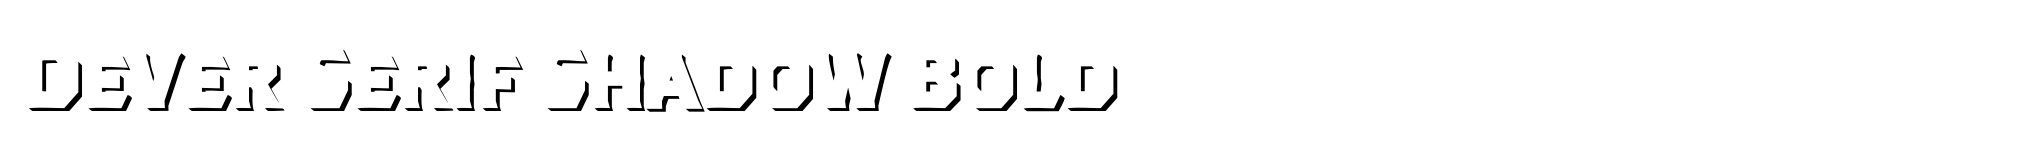 Dever Serif Shadow Bold image